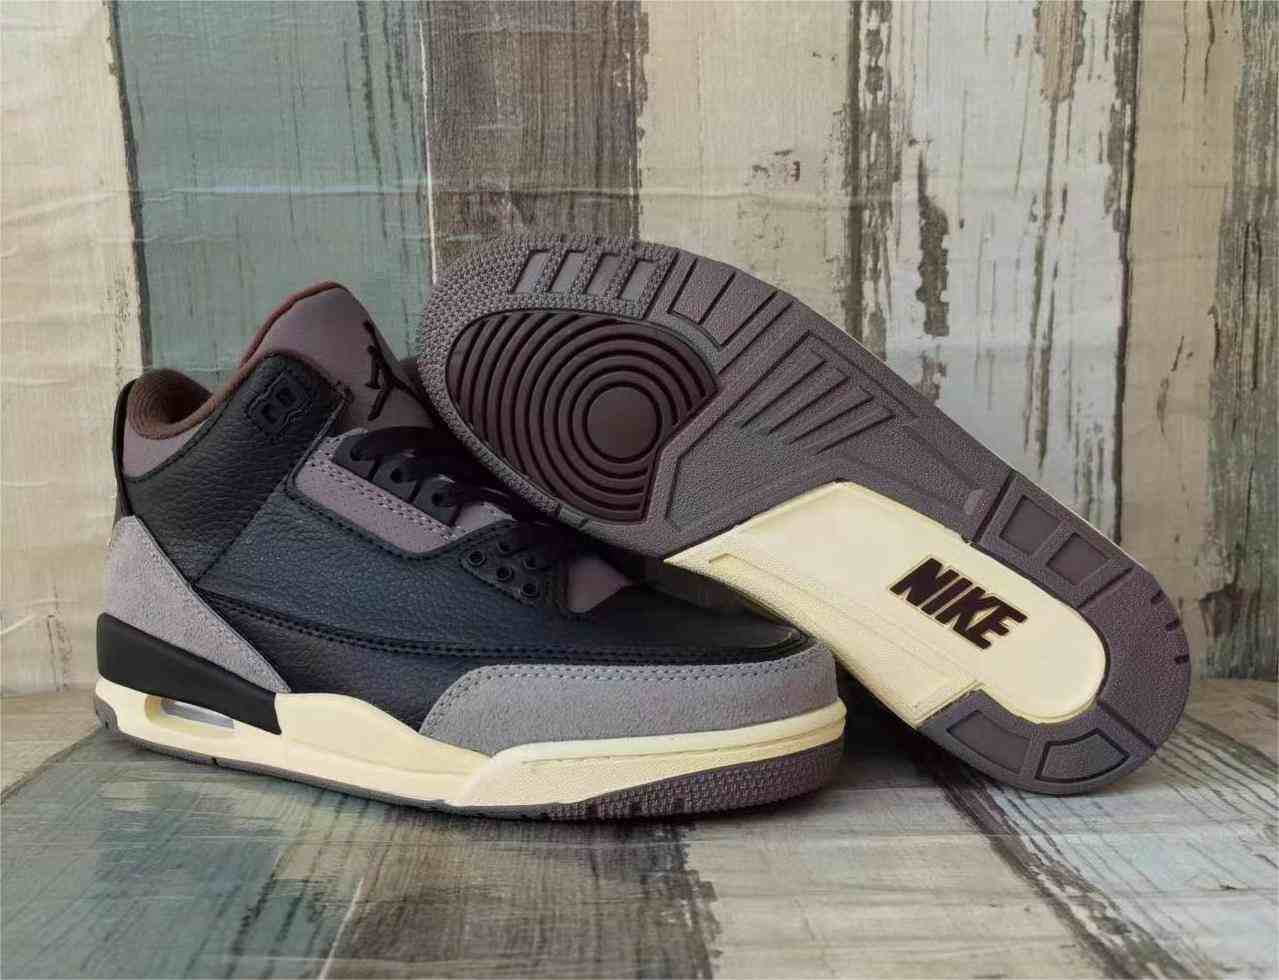 Air Jordan 3 Black coffee color us7-us13 Men's shoes